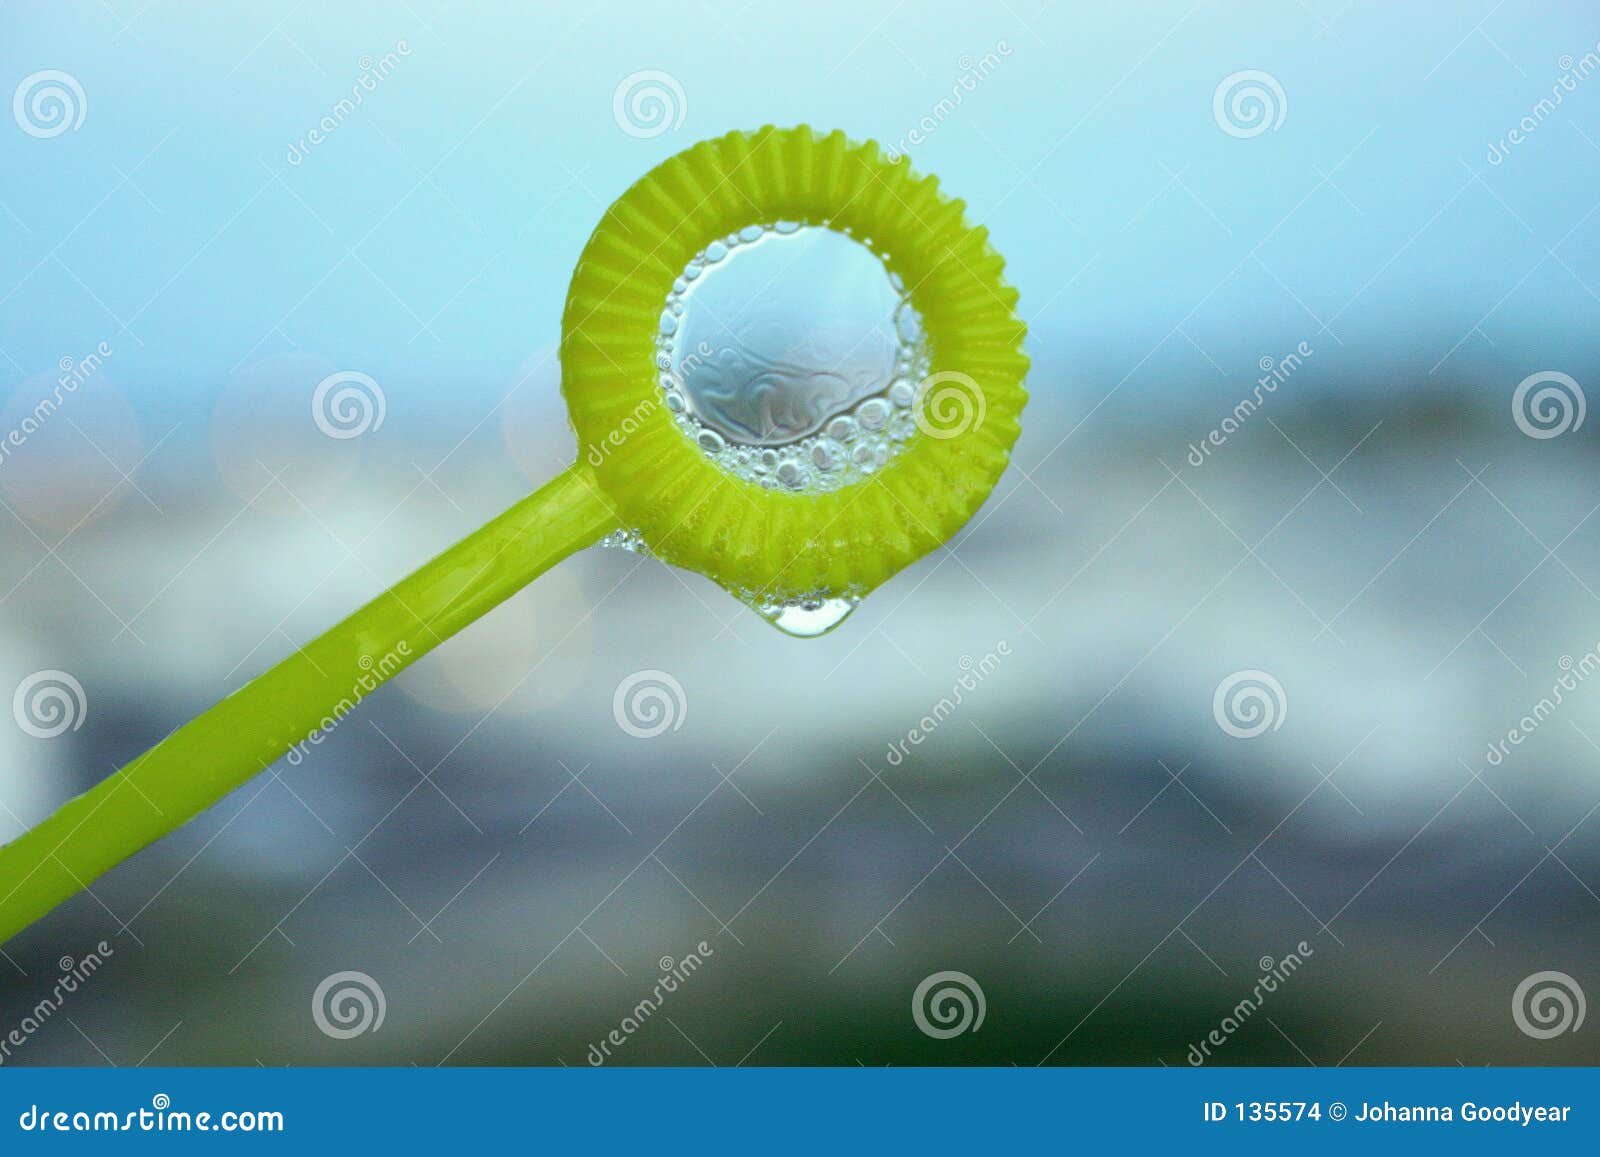 Bubble wand stock photo. Image of wand, simplicity, shapes - 135574